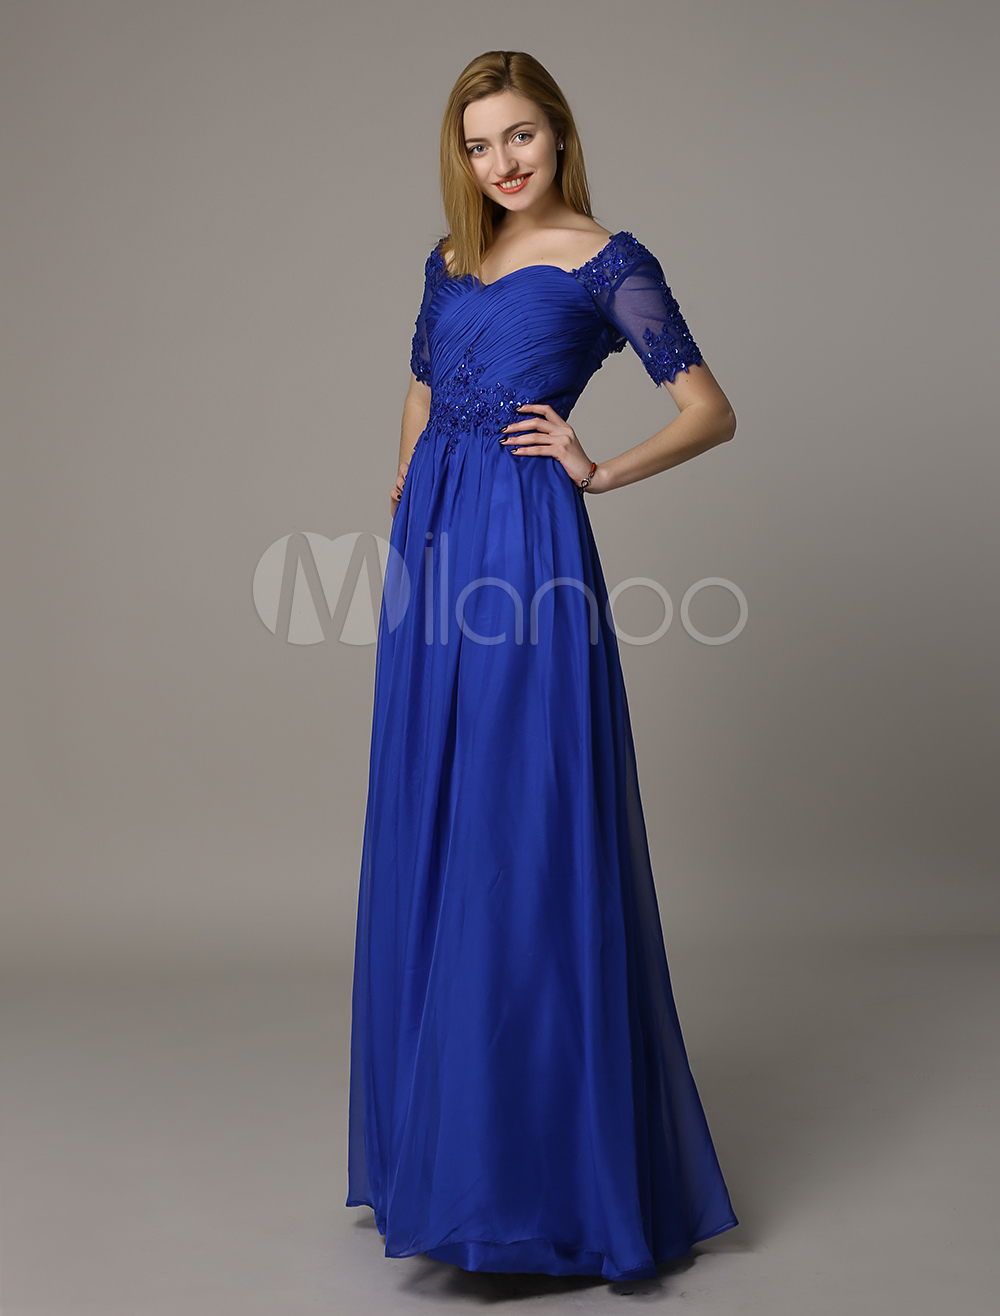 Royal Blue Short Sleeve Chiffon Lace Applique Prom Dress (Wedding Prom Dresses) photo